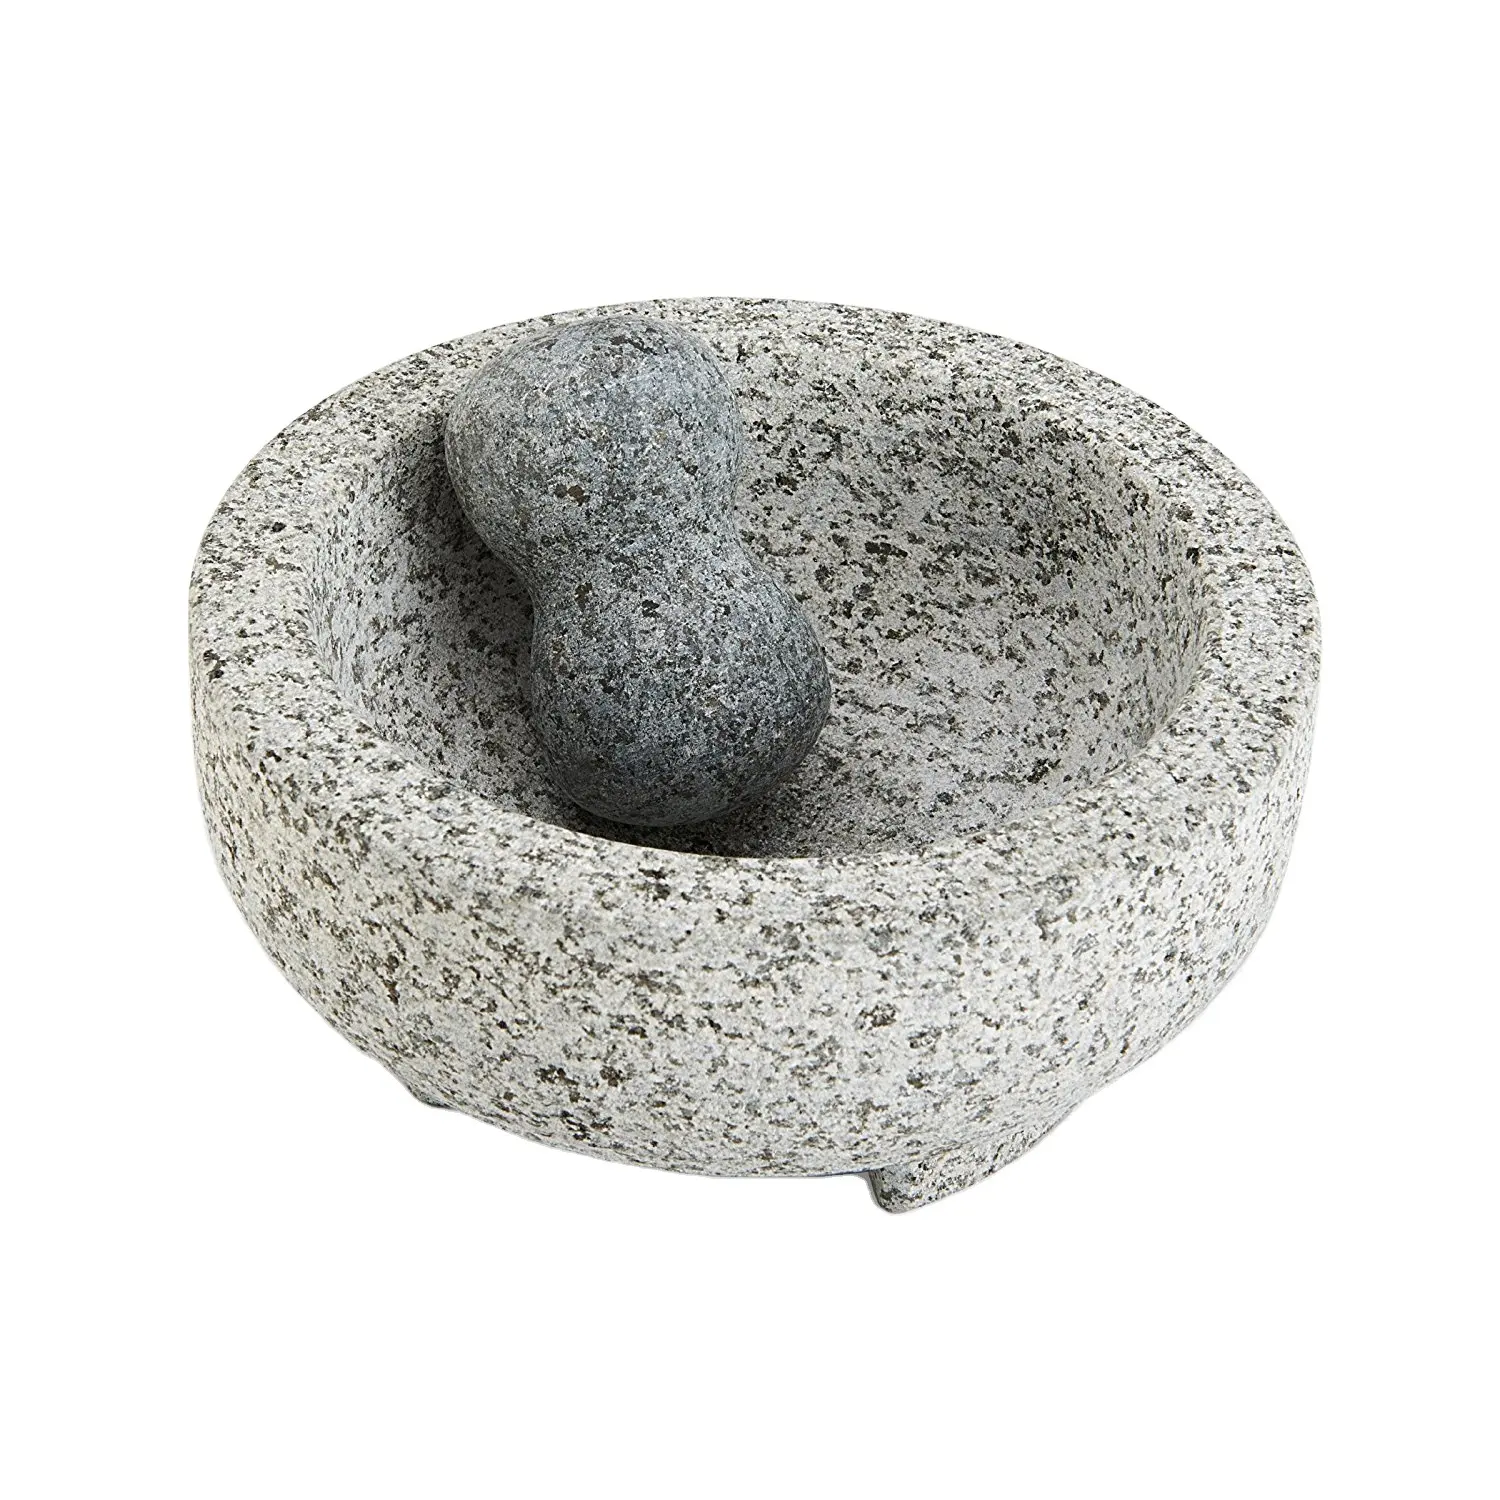 Ceramic grinder Mortar For Sale Professional Natural Large Granite Marble Mortar And Pestle set Exporters India